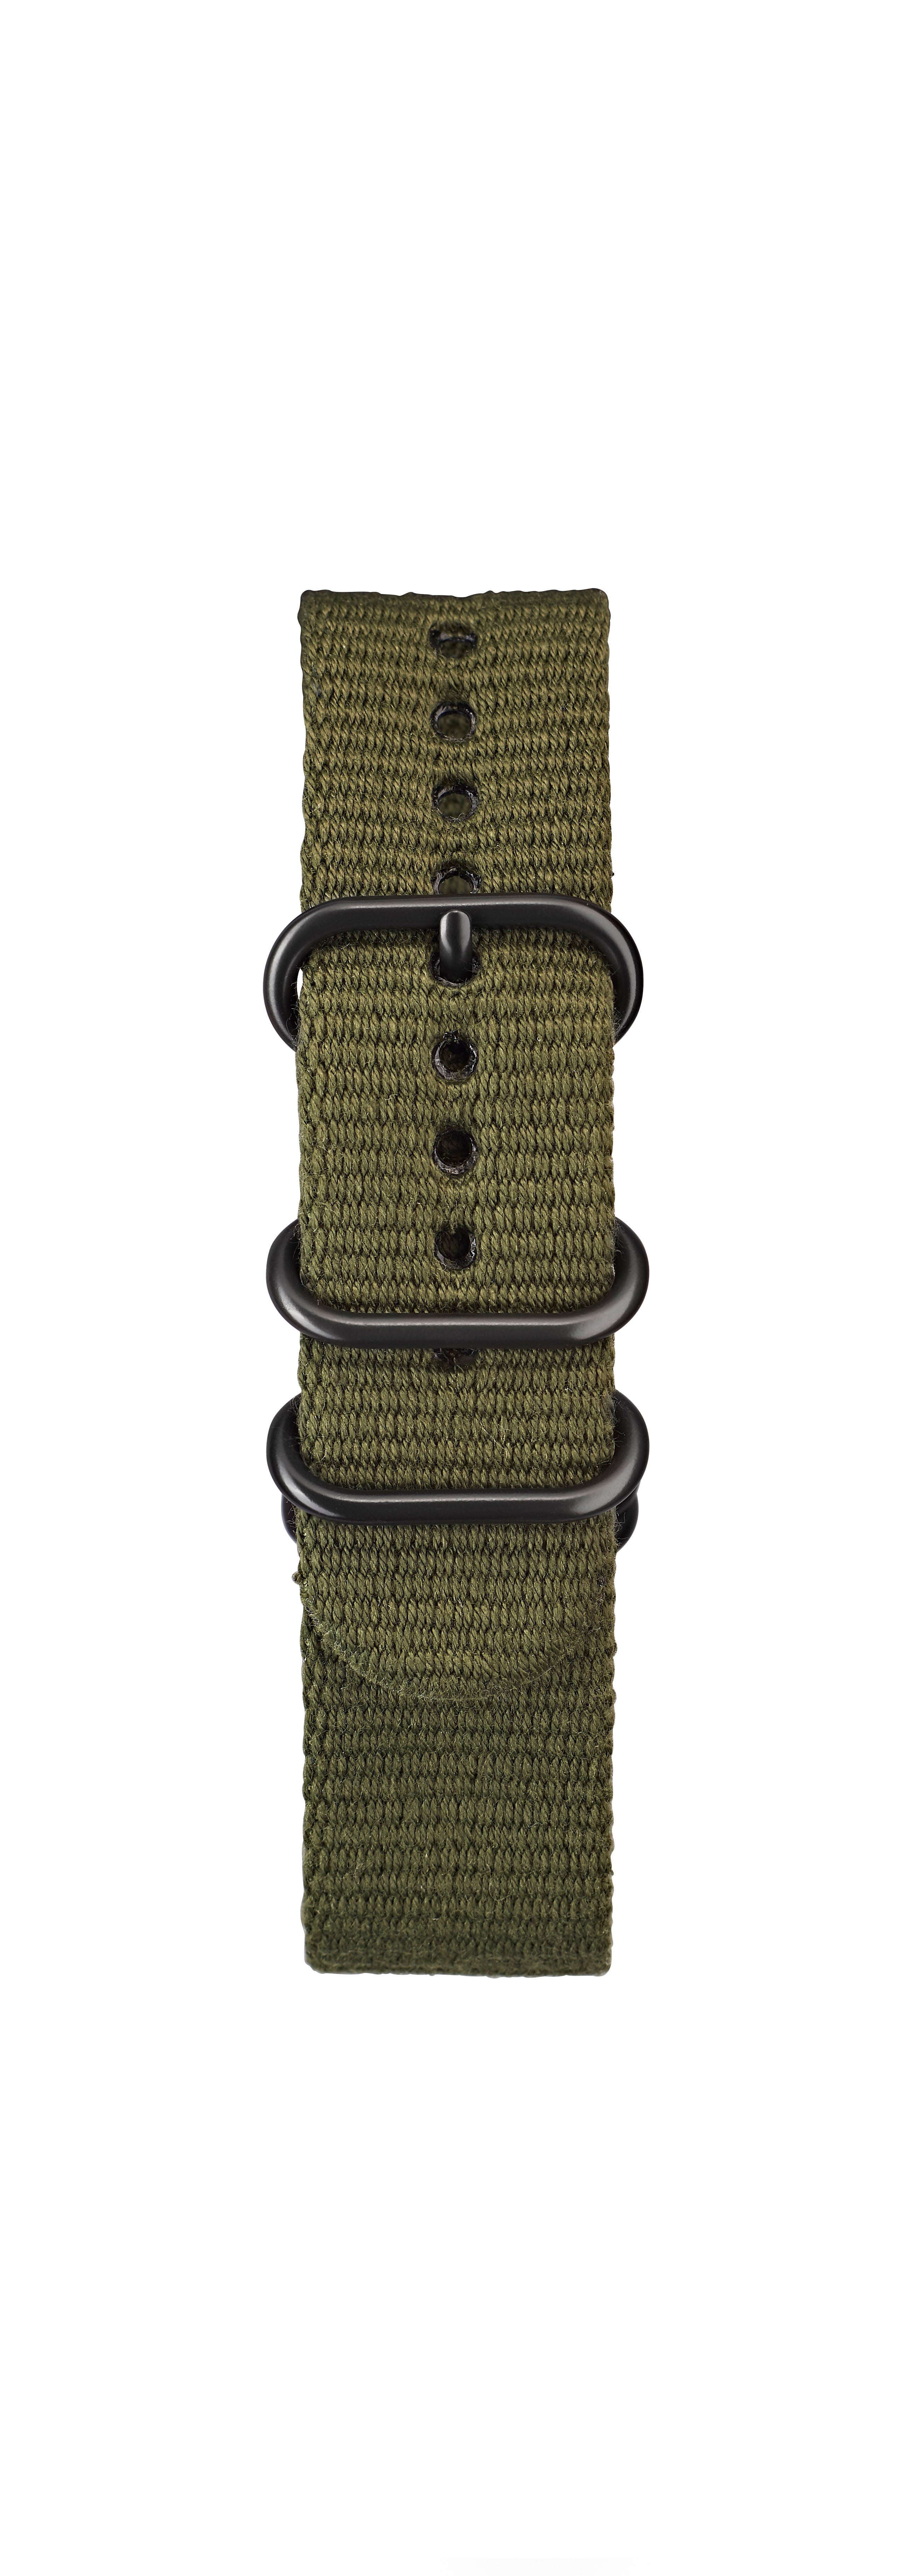 STR-N01: Olive Green Ballistic Military Webbing Strap